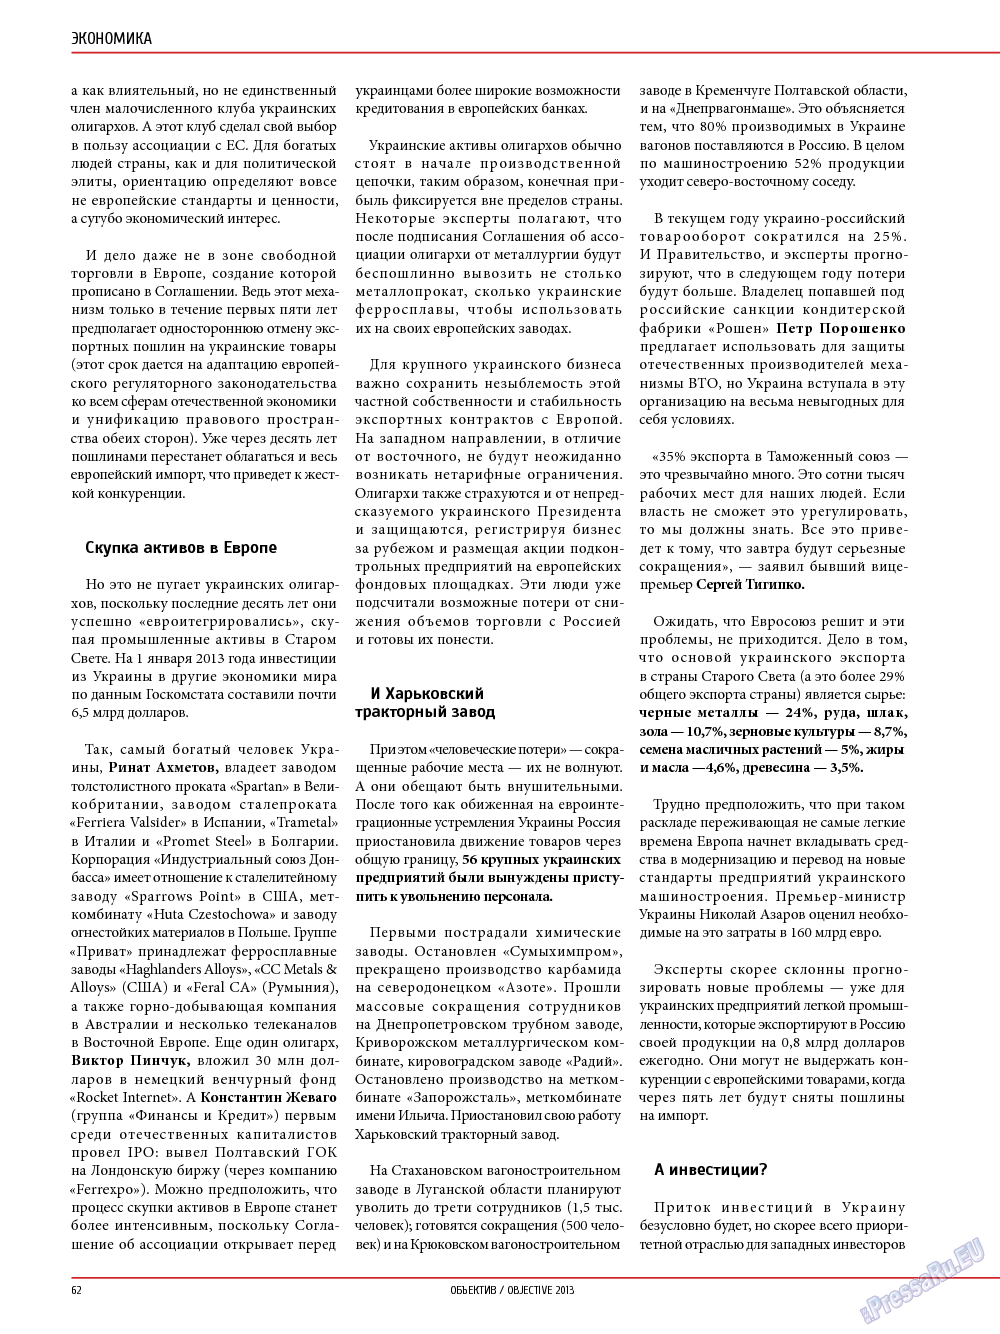 Объектив EU, журнал. 2013 №4 стр.62